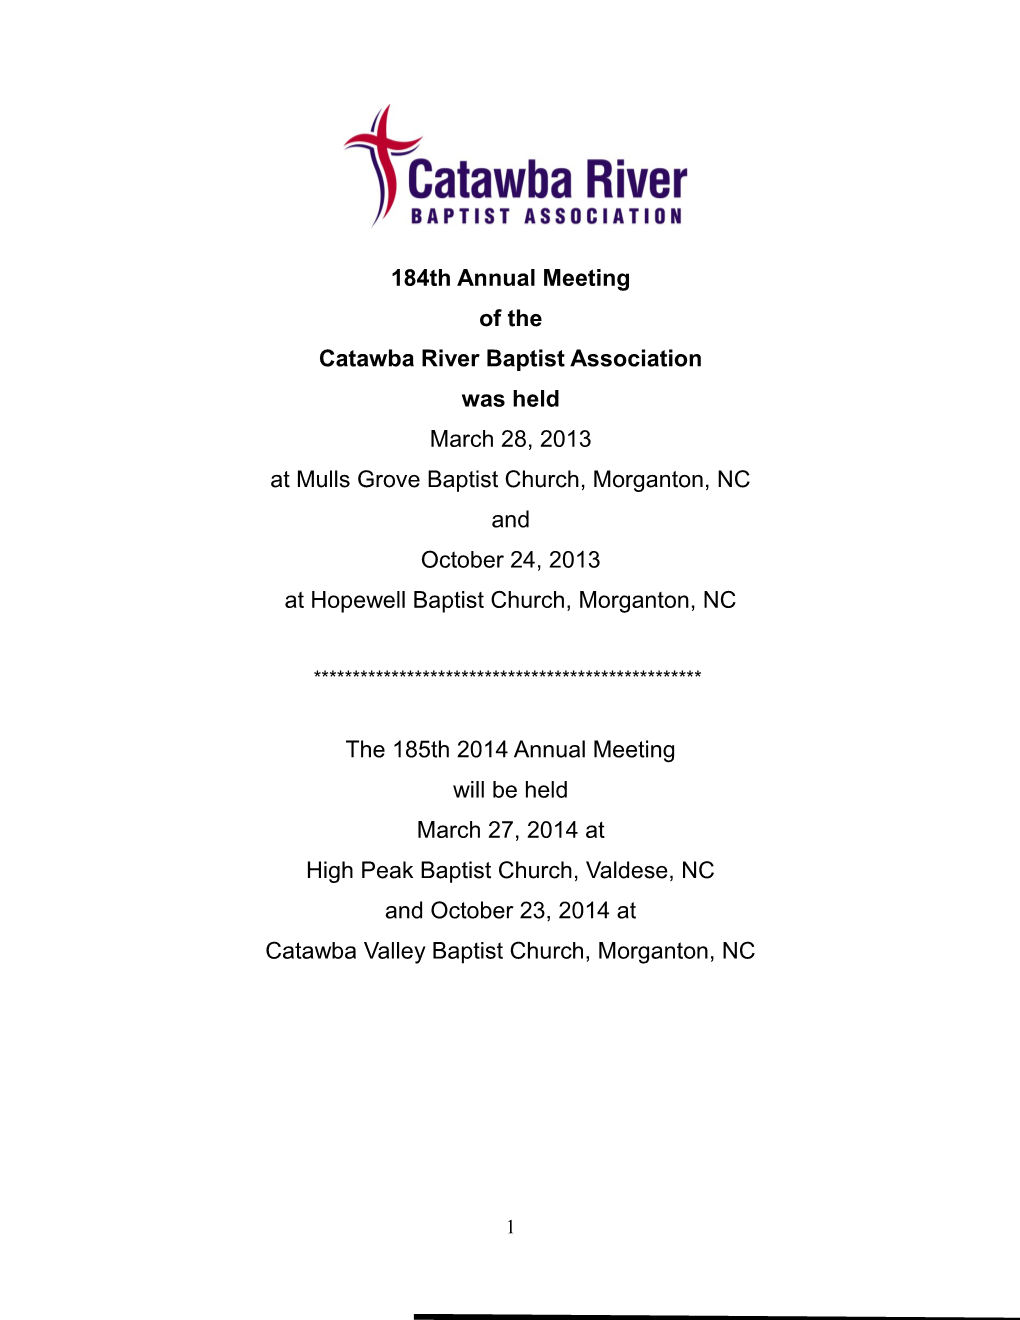 Catawba River Baptist Association